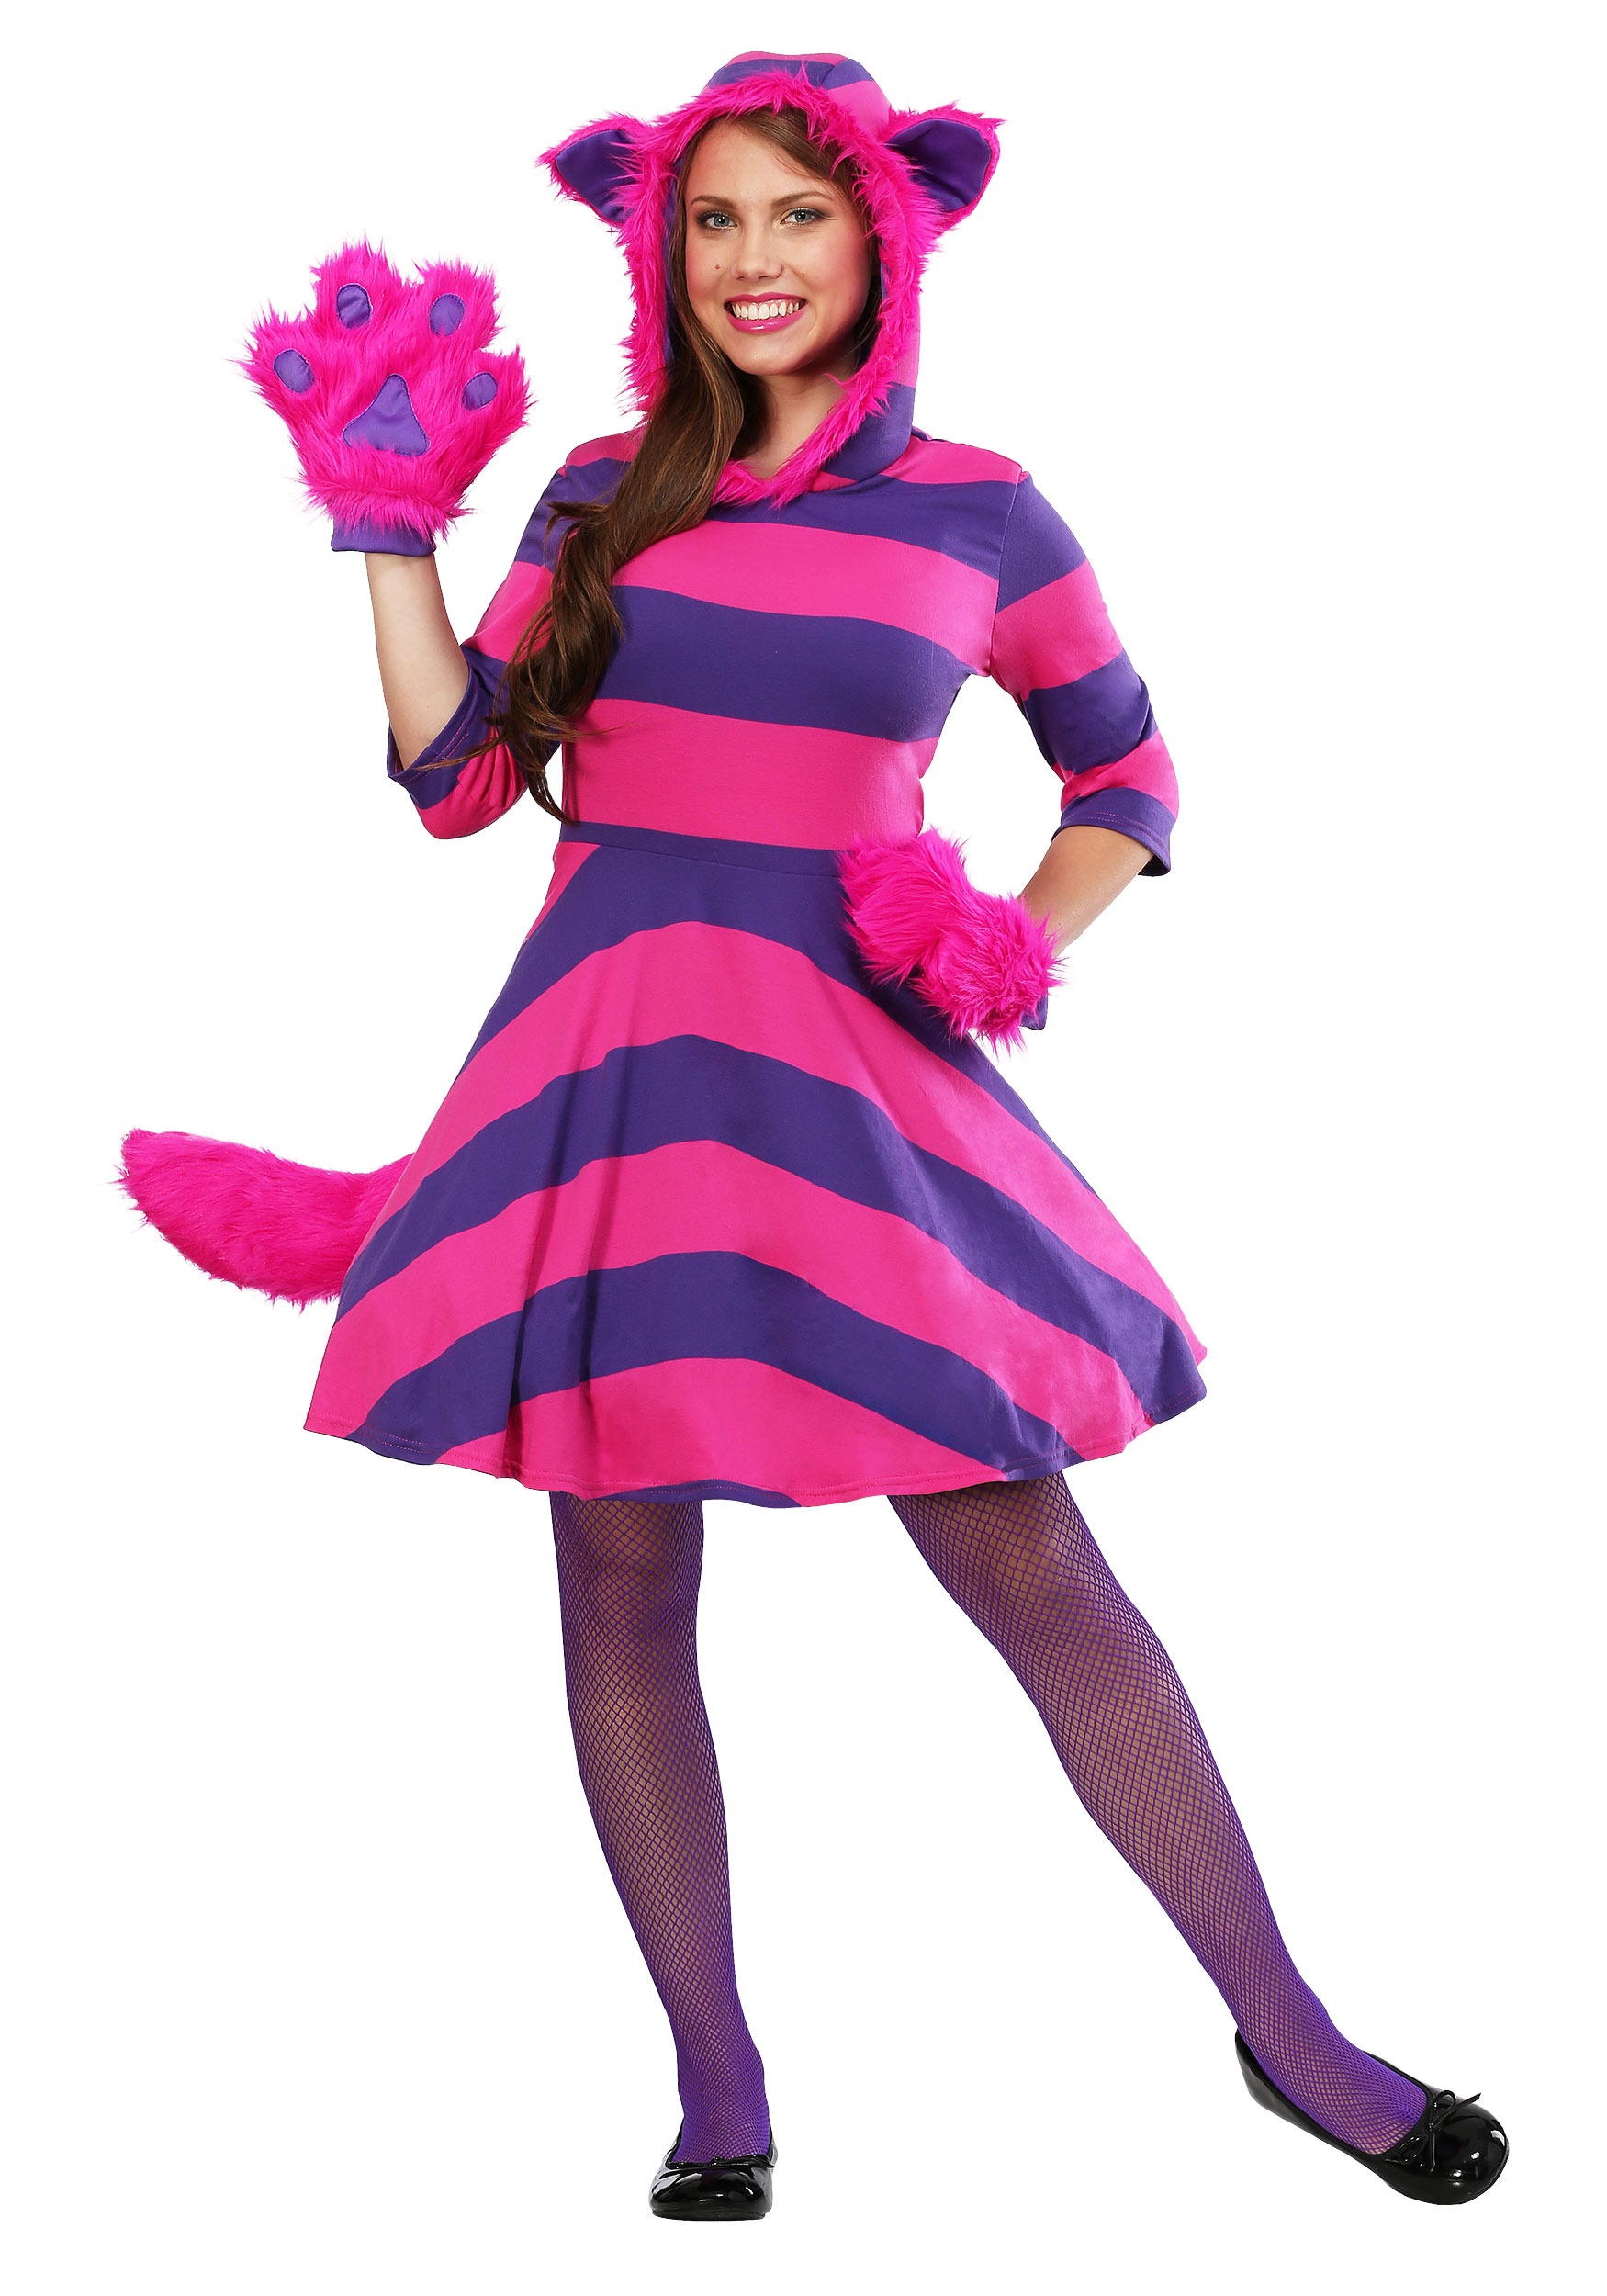 Photos - Fancy Dress CATerpillar FUN Costumes Cheshire Cat Costume Dress for Women | Alice in Wonderland Co 